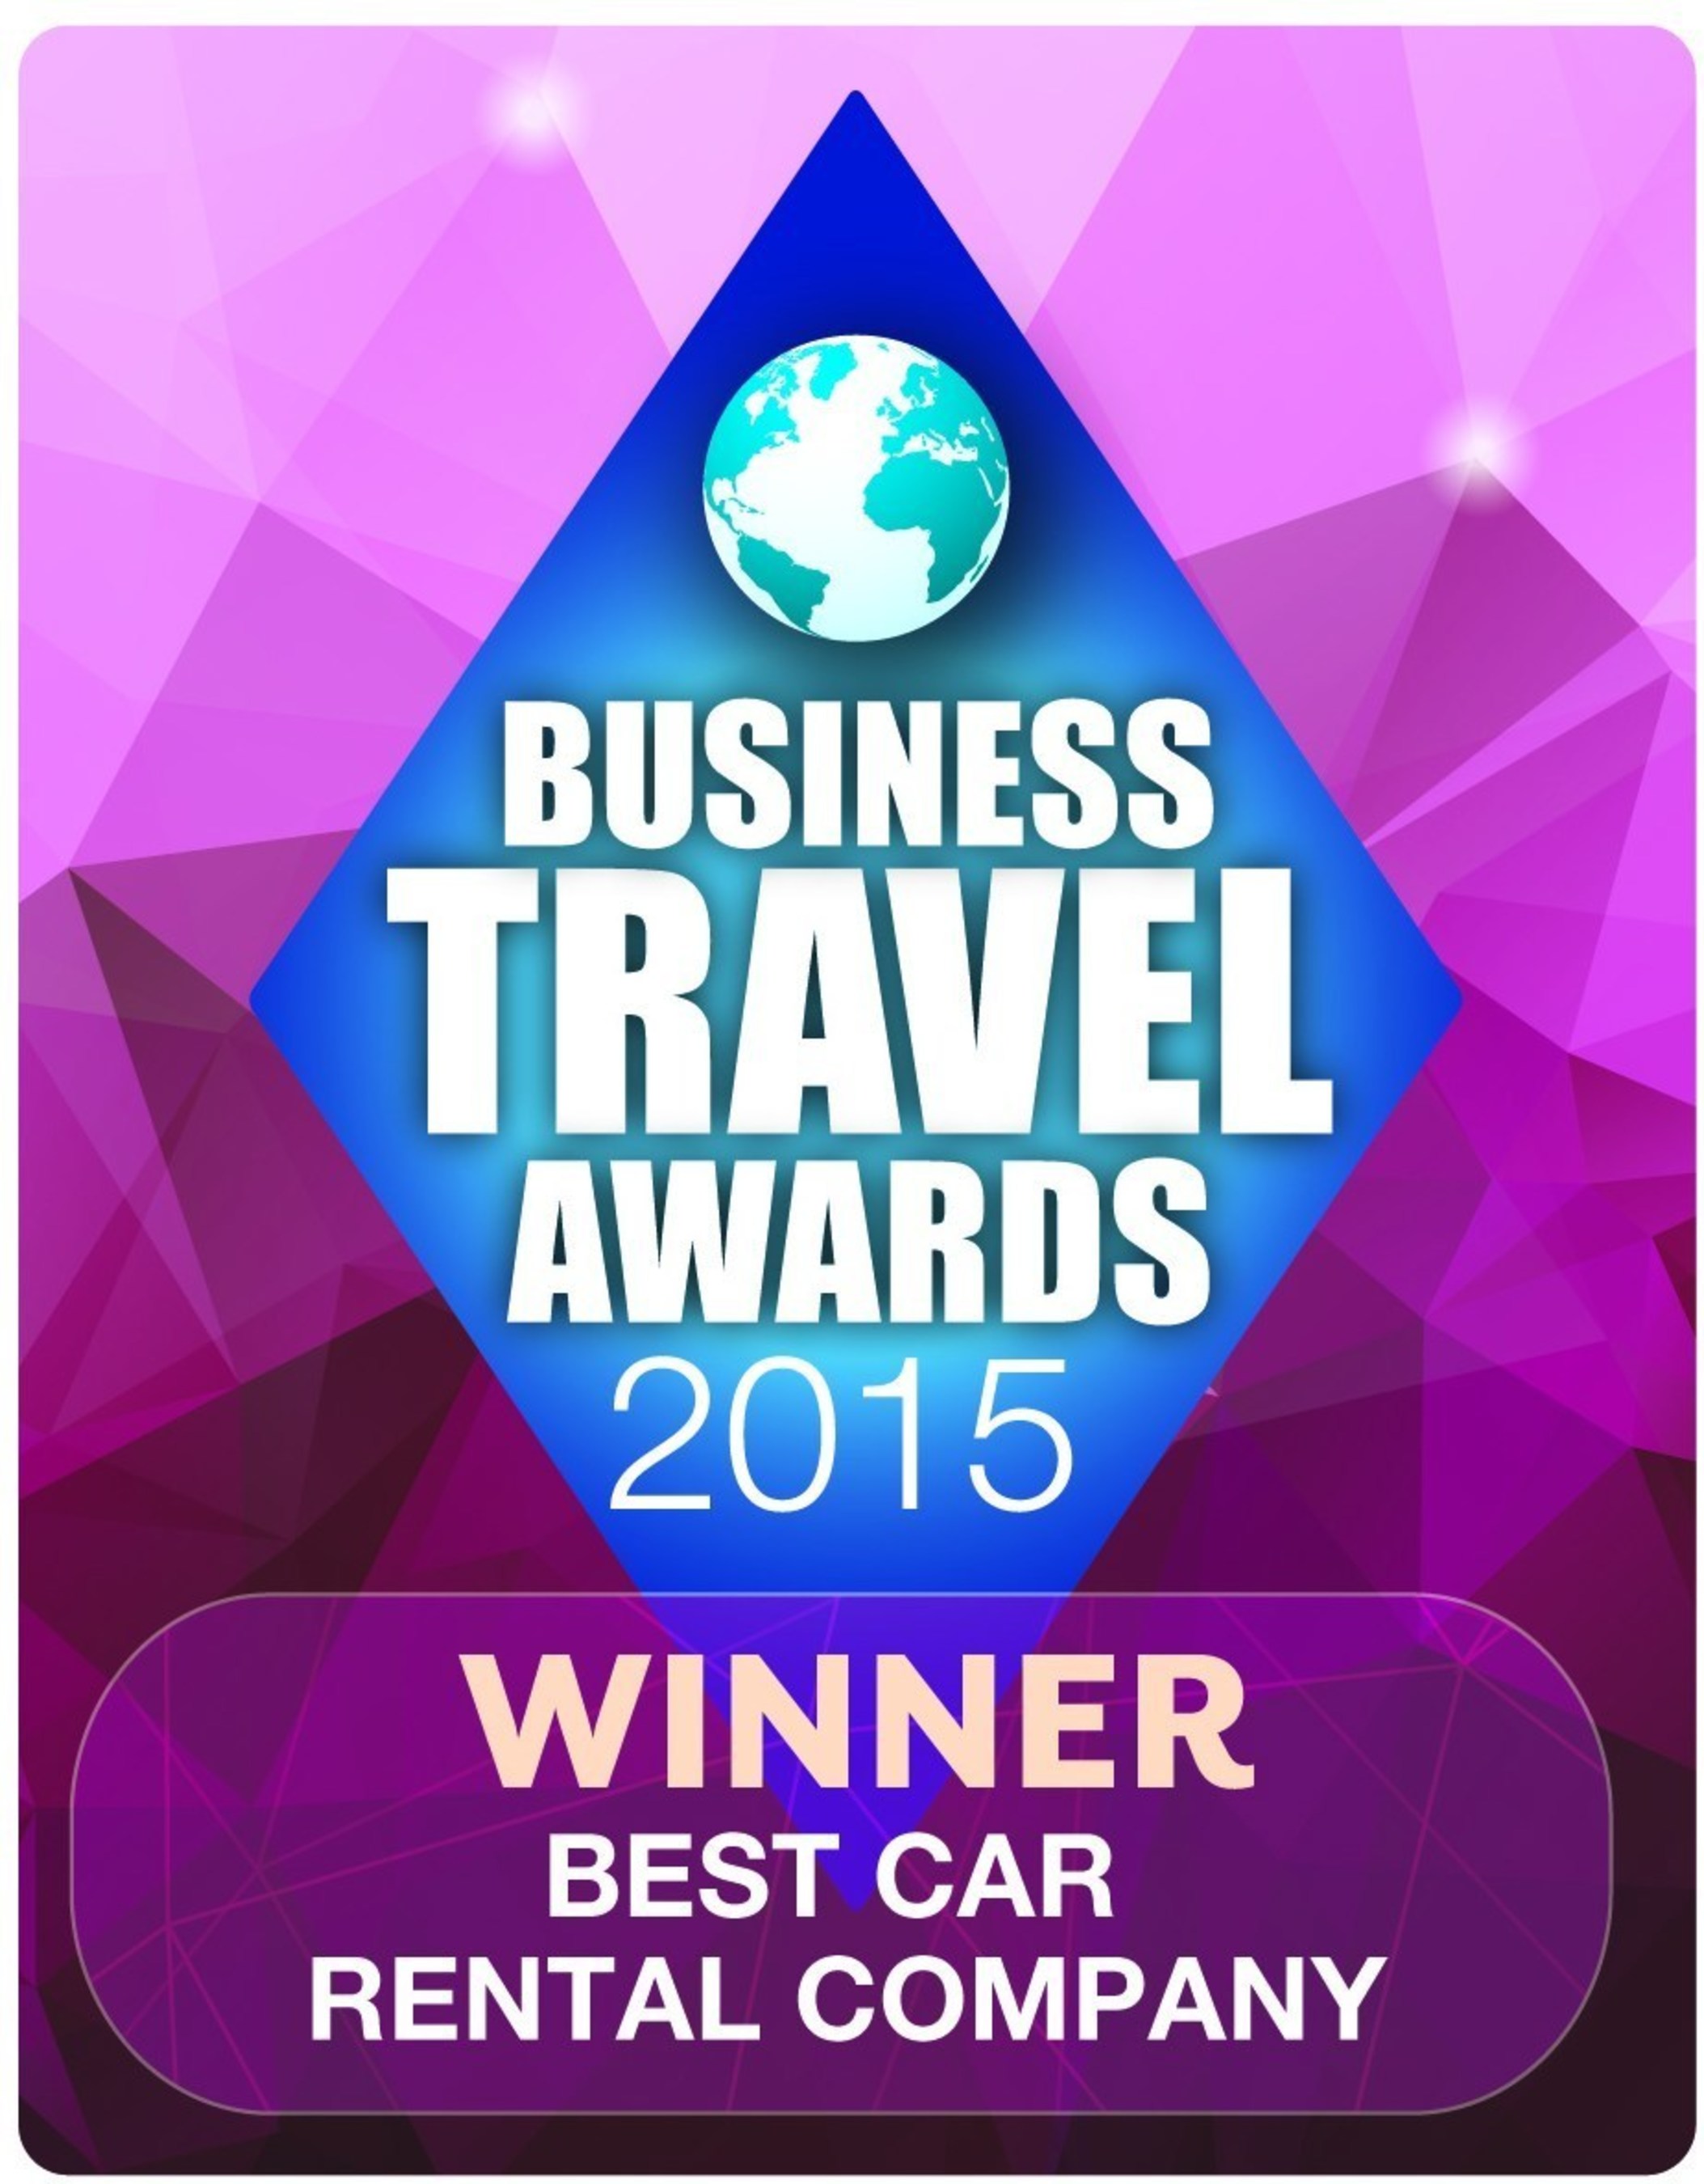 Judges praise Hertz's "constant innovation" at Business Travel Awards 2015